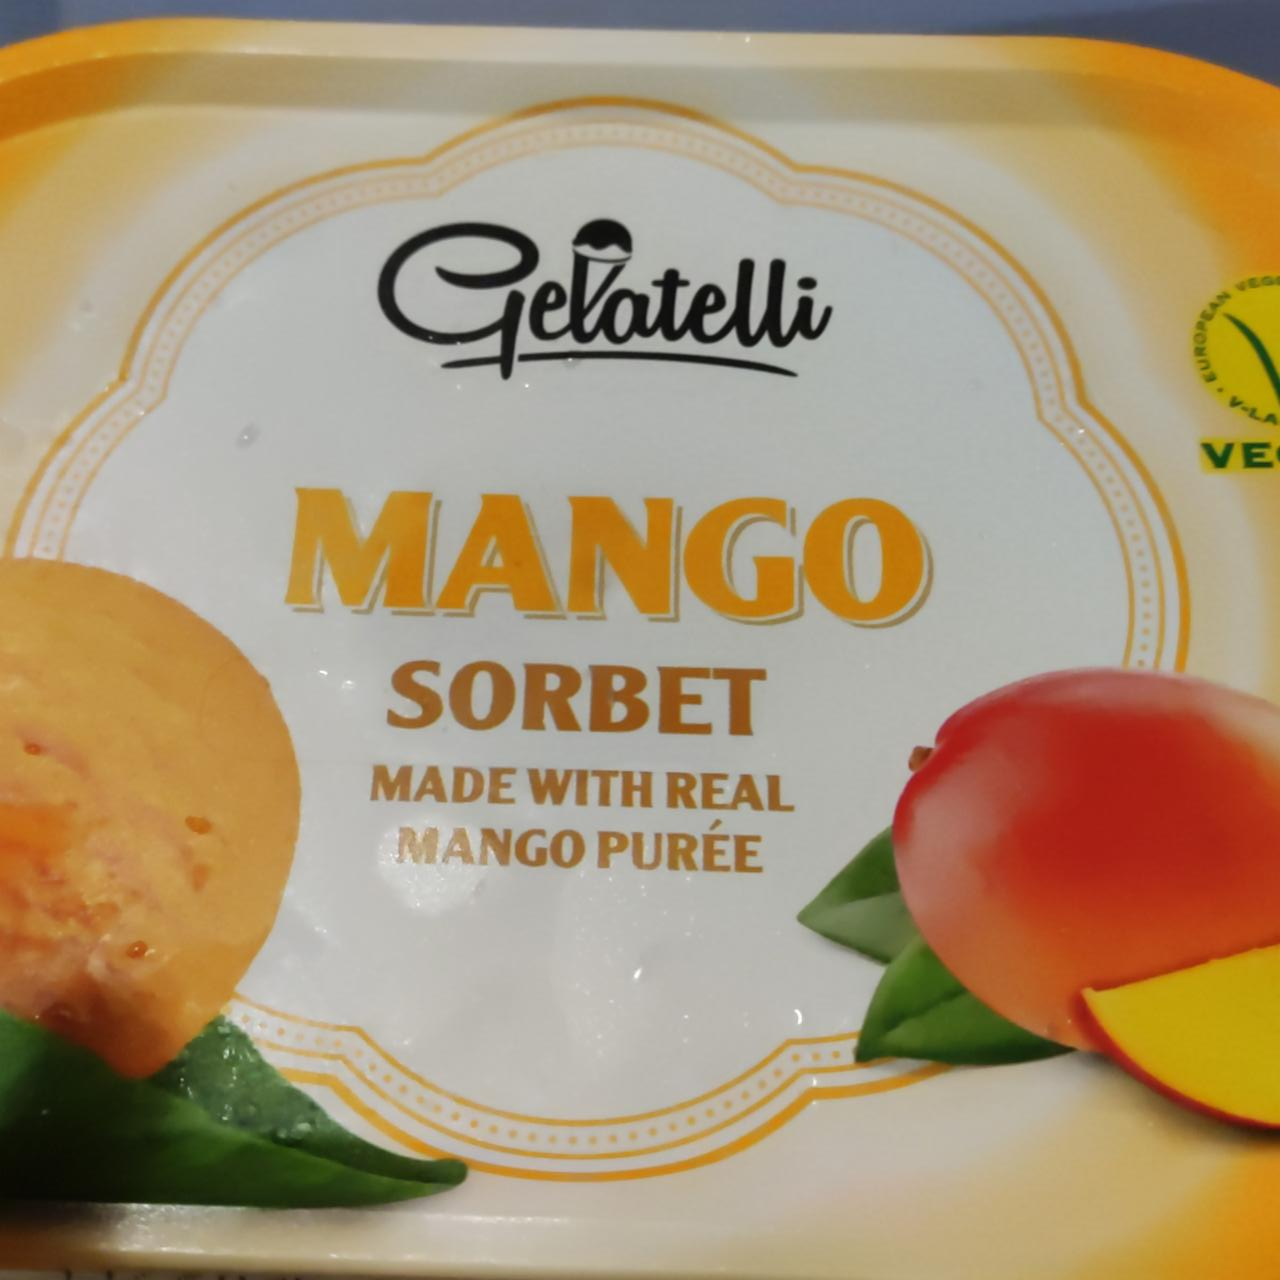 Фото - Морозиво Mango Sorbet Gelatelli